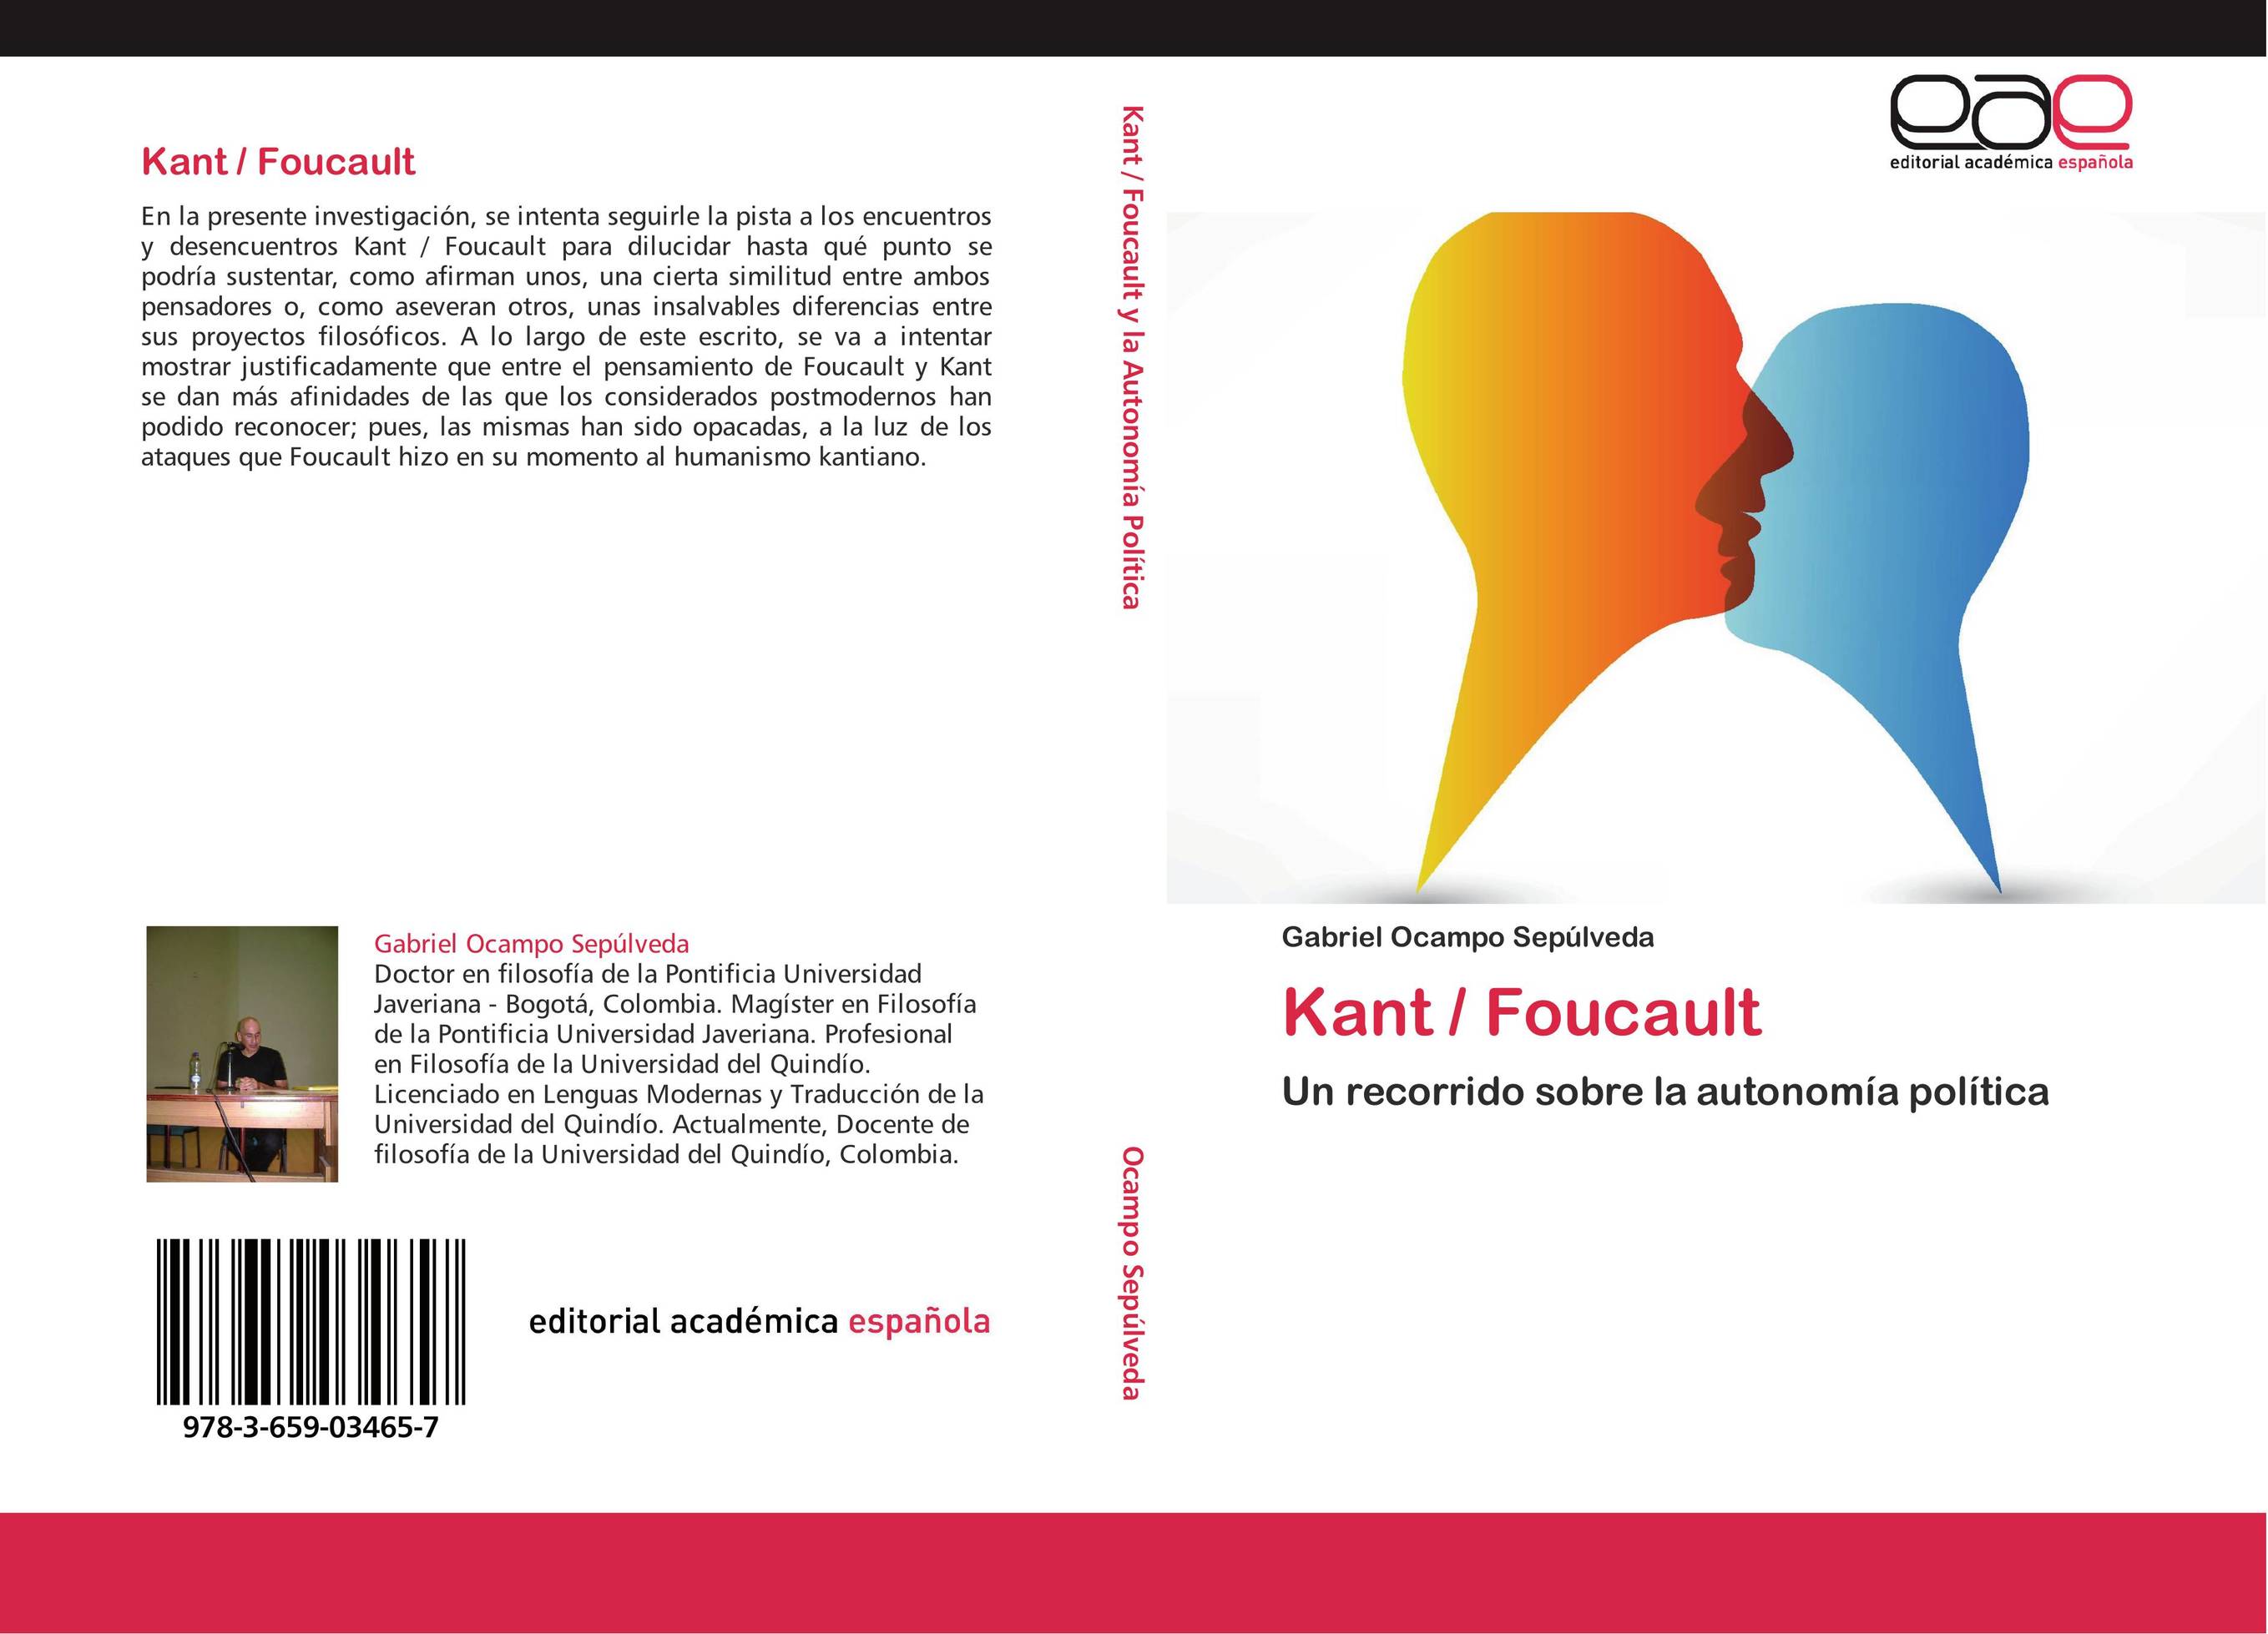 Kant / Foucault